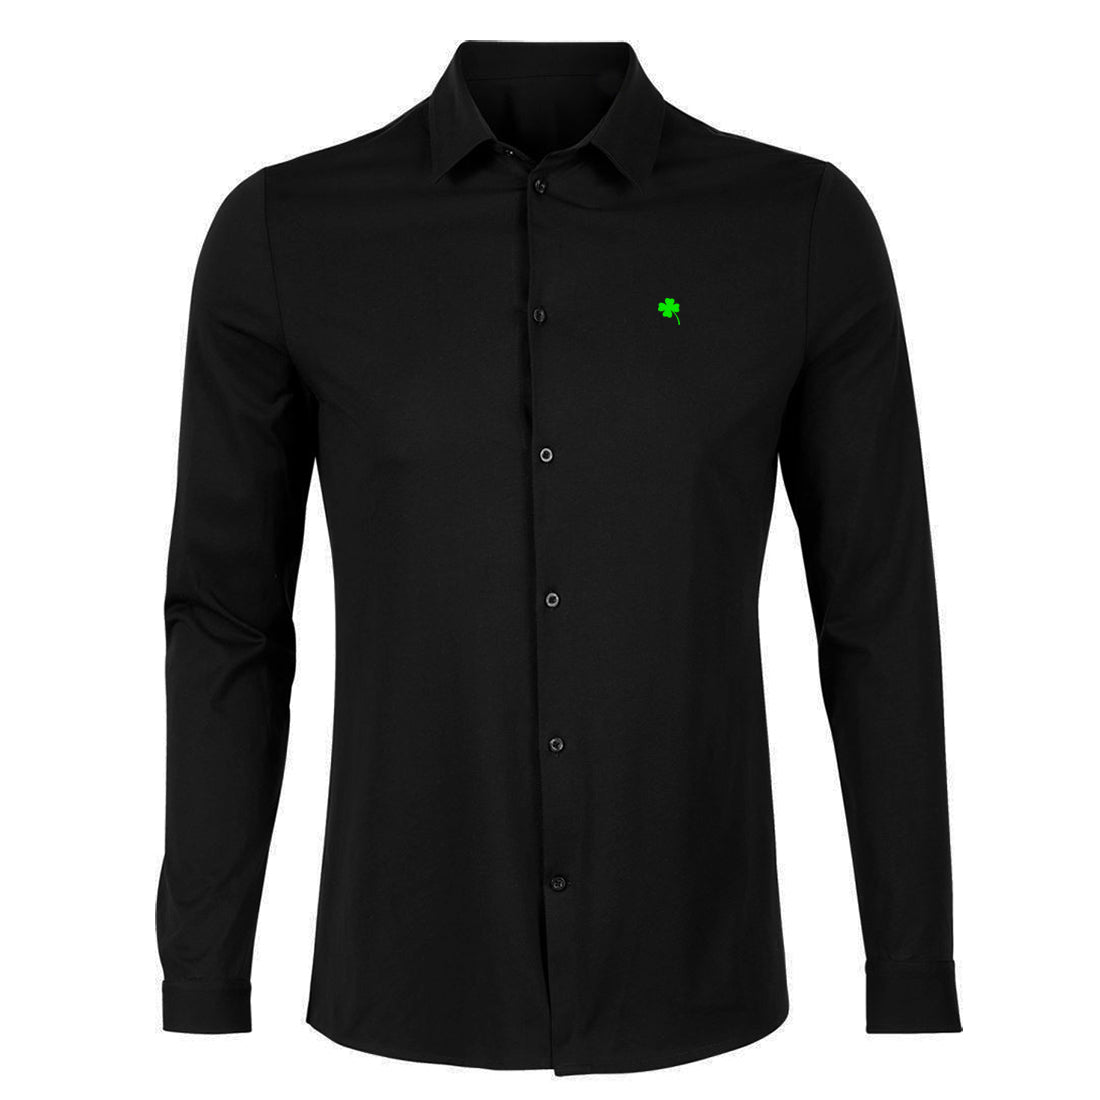 Black and White №10 | Kurz und tailliert geschnittenes langarm Hemd